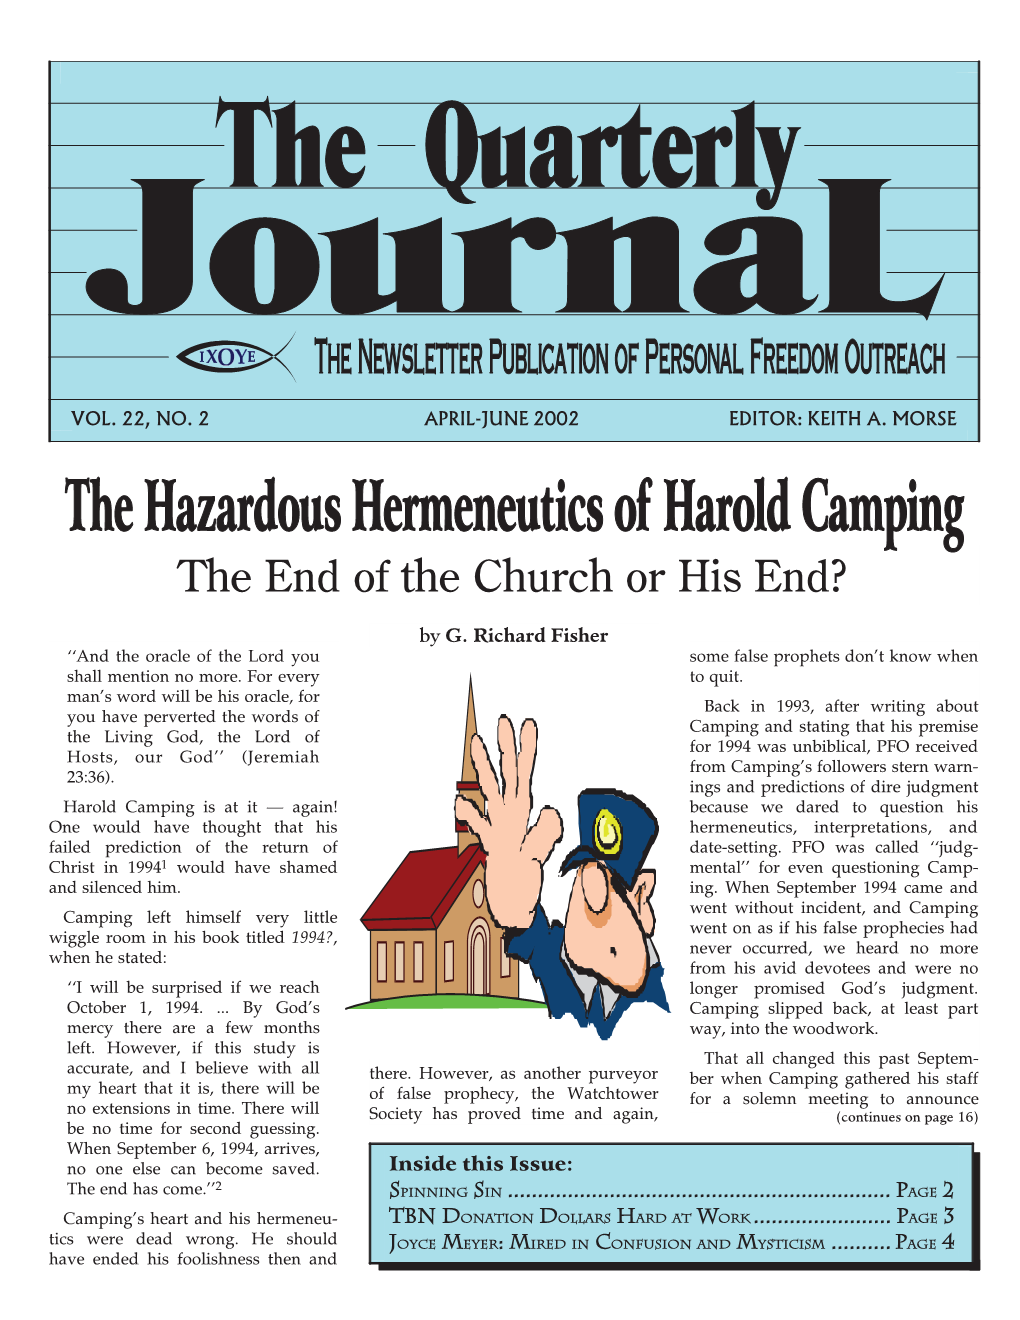 The Hazardous Hermeneutics of Harold Camping